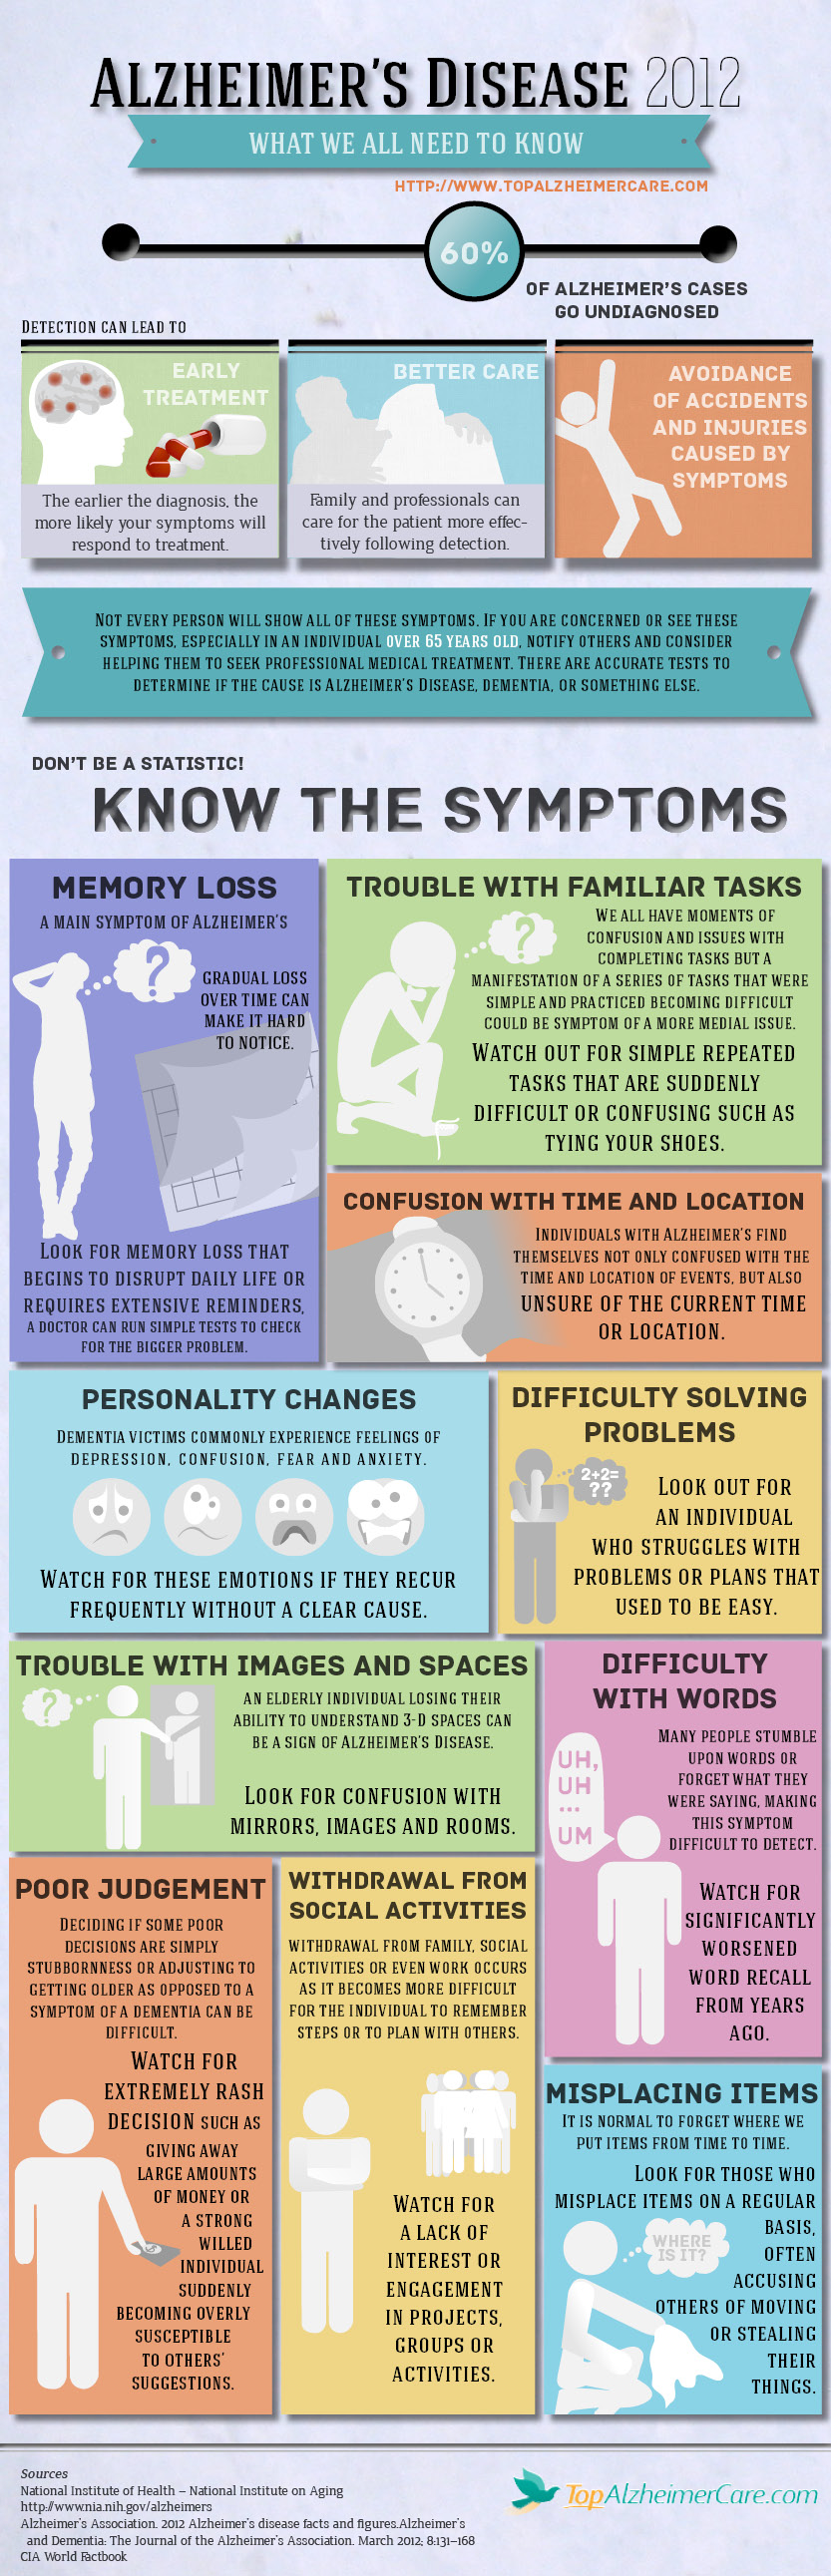 Symptoms of Alzheimer's Disease